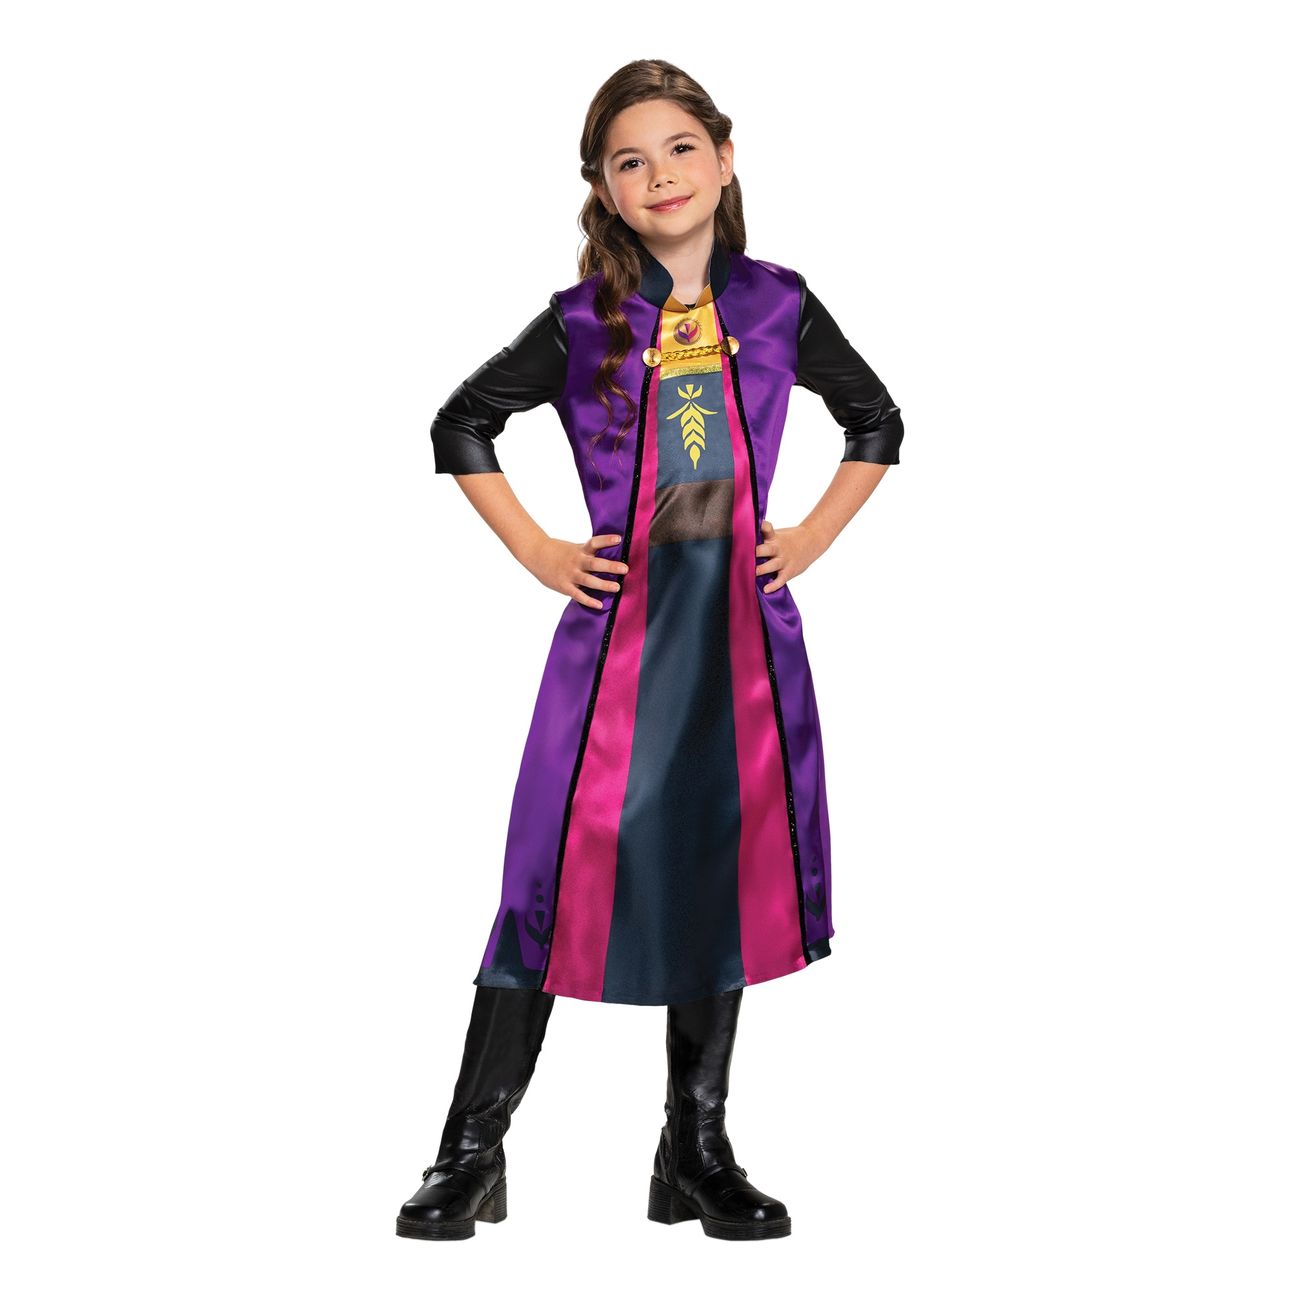 Frost Anna børnekostume - Disney prinsesse kostume til børn